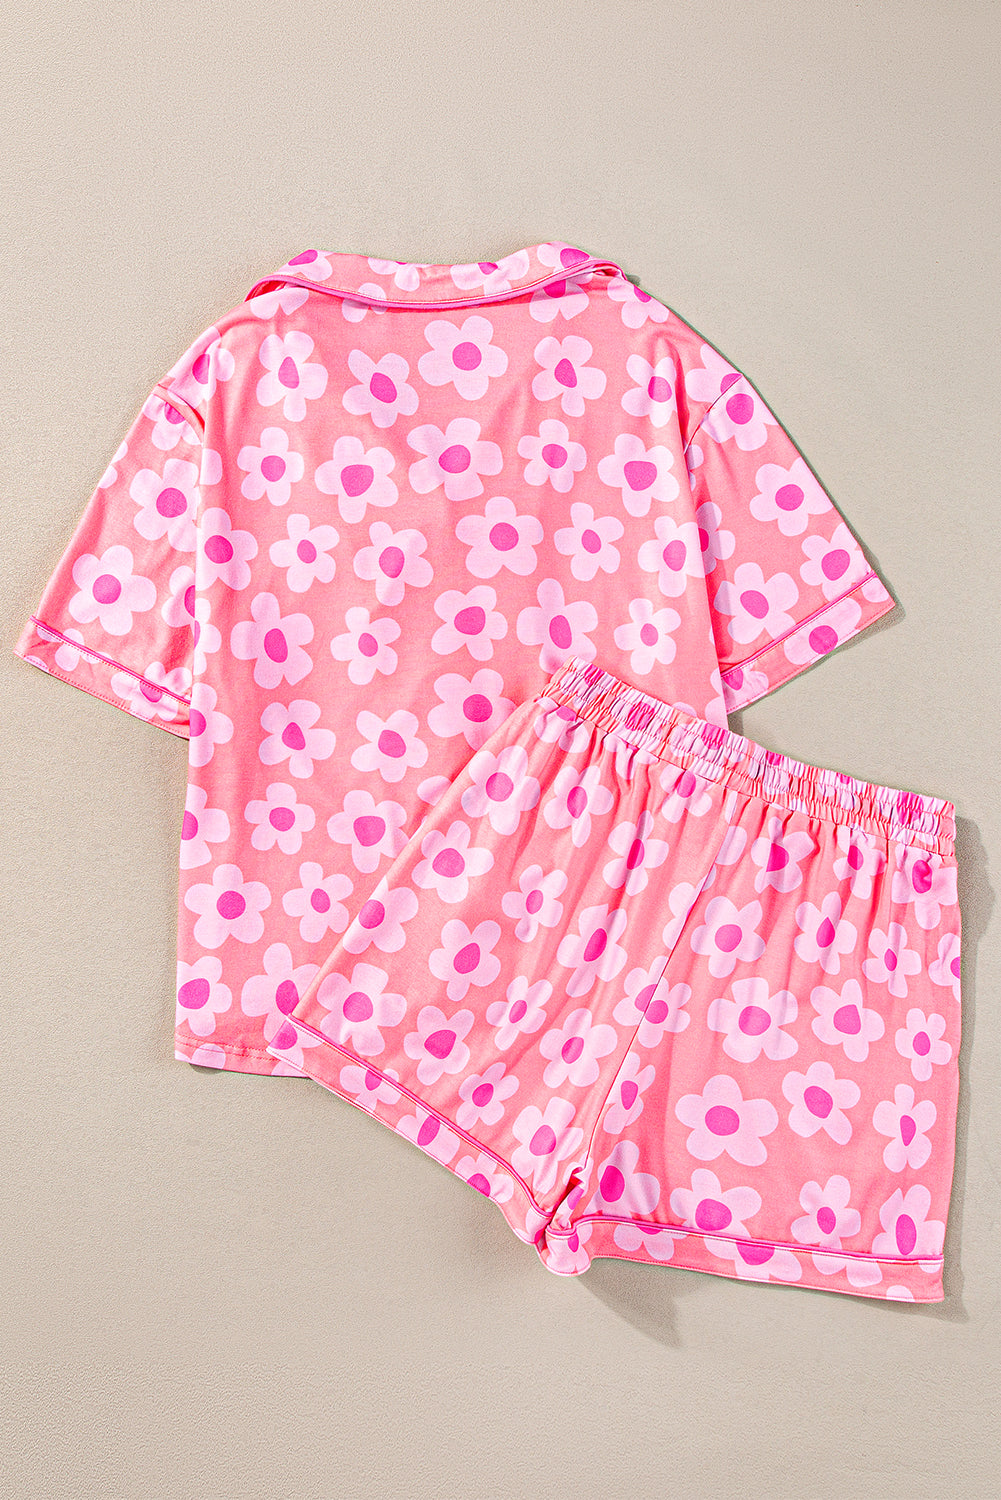 Pink Flower Print Short Sleeve Shirt Pajamas Set